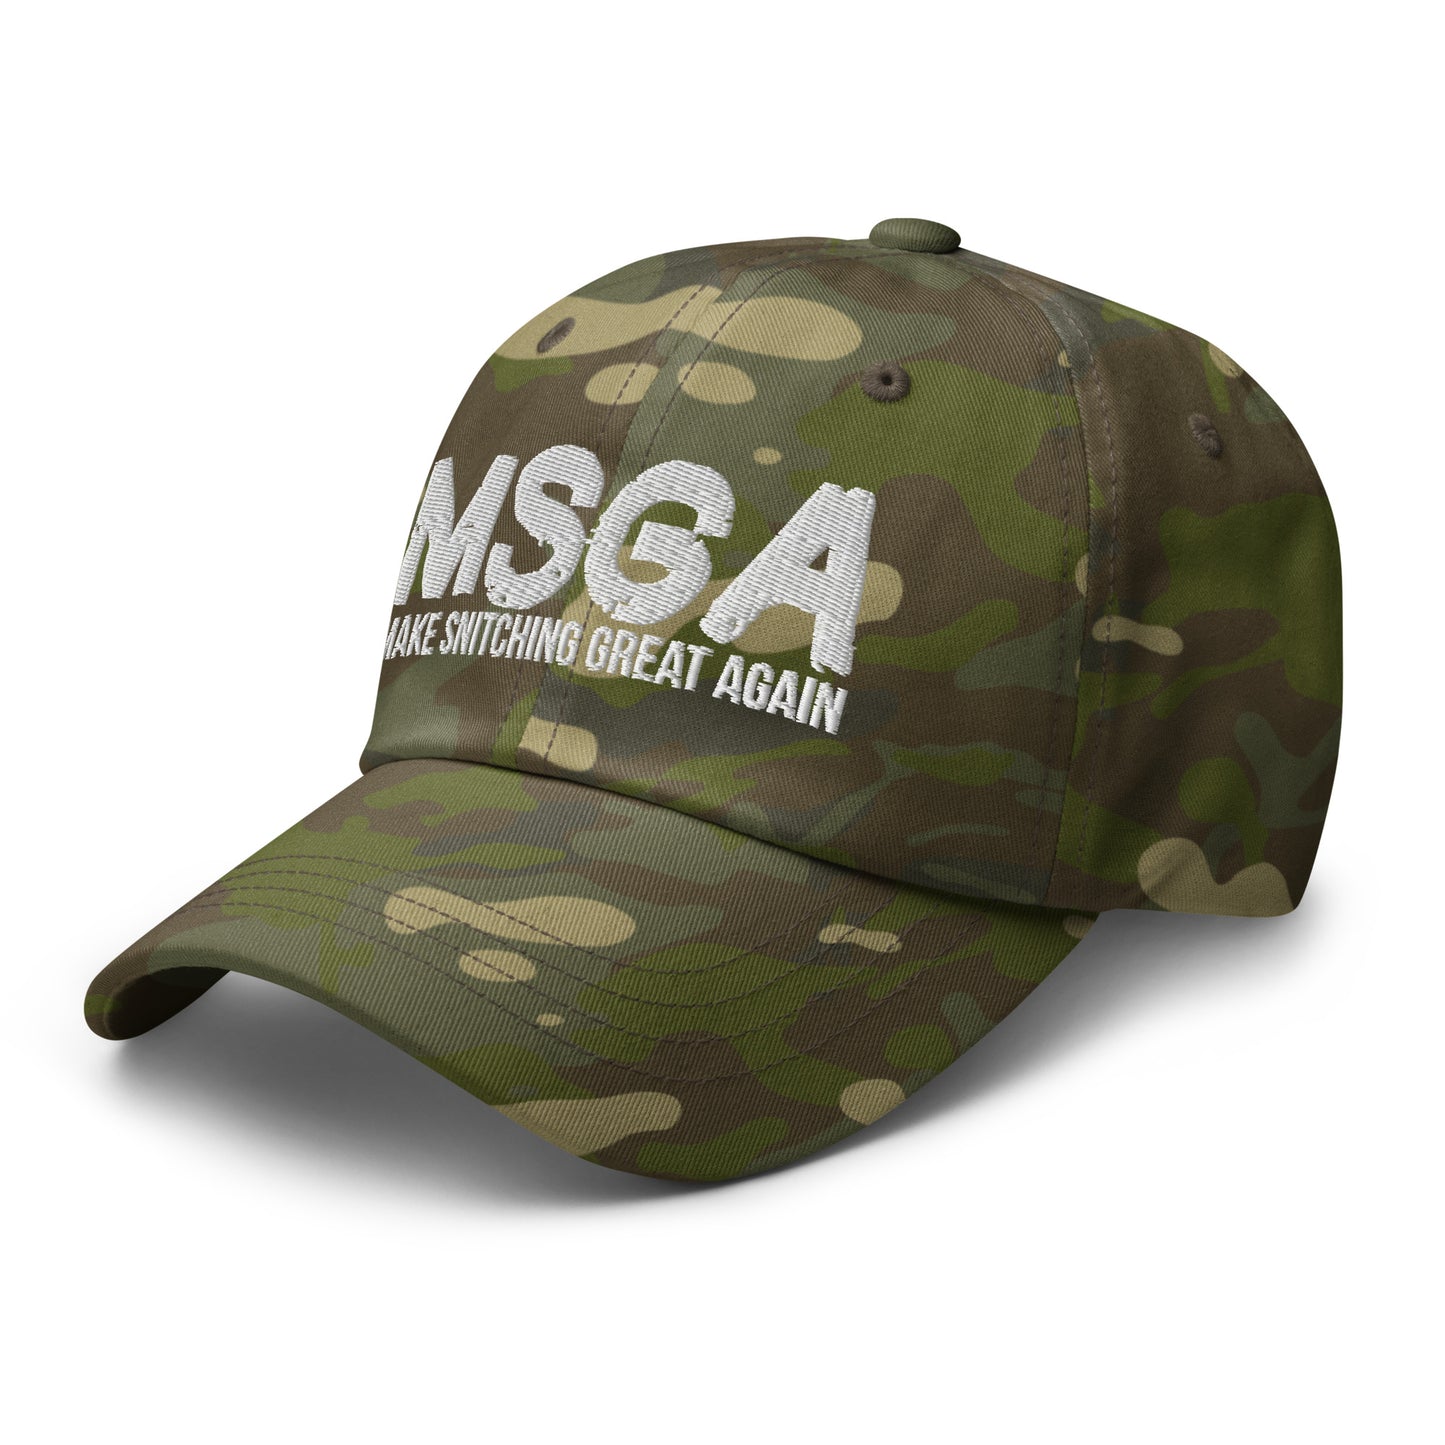 MSGA War Hat - Make Snitching Great Again